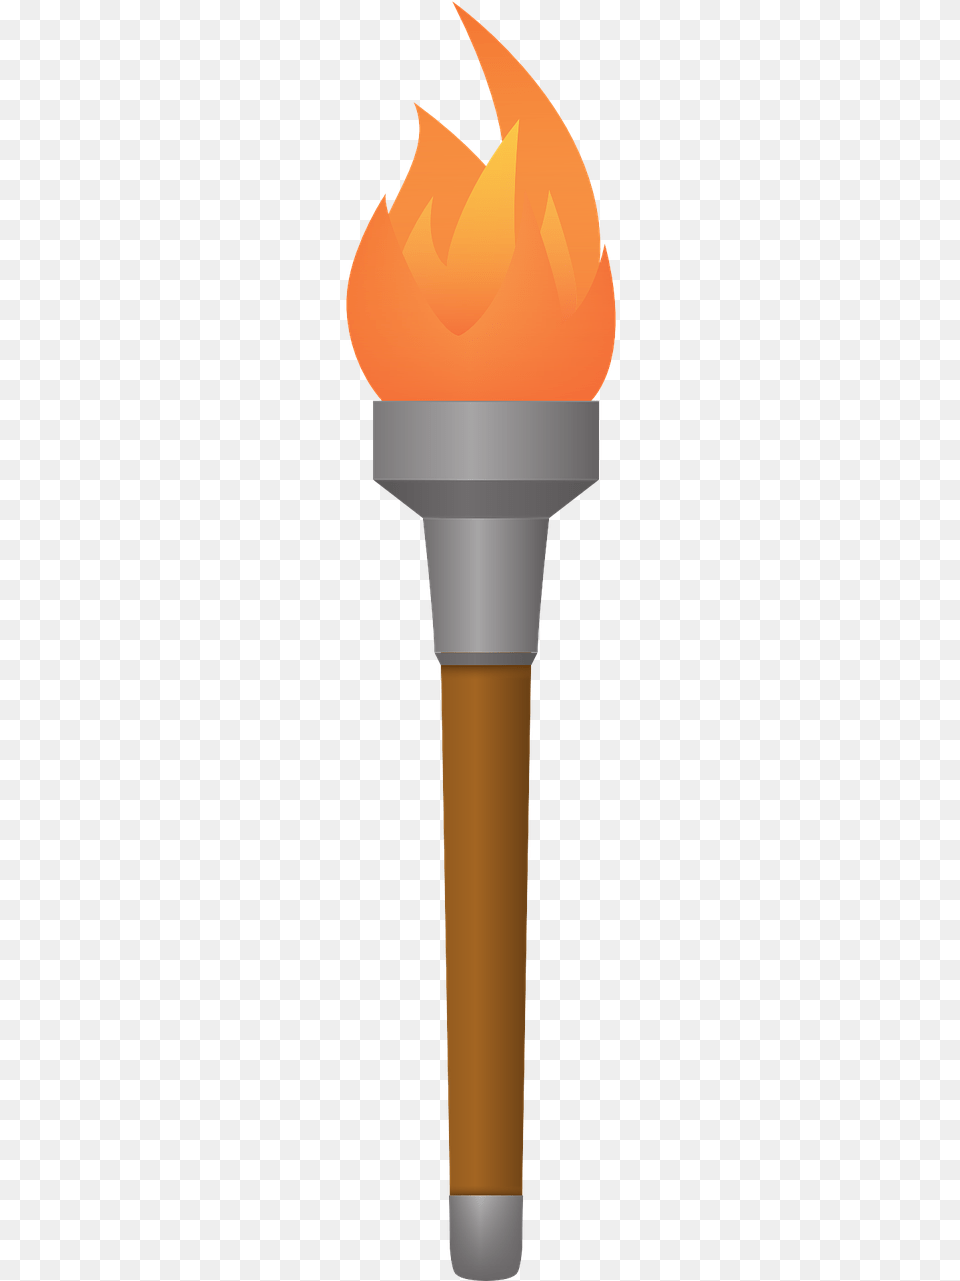 Torchlight Torch Fire Photo Flambeaux The Cask Of Amontillado, Light Free Png